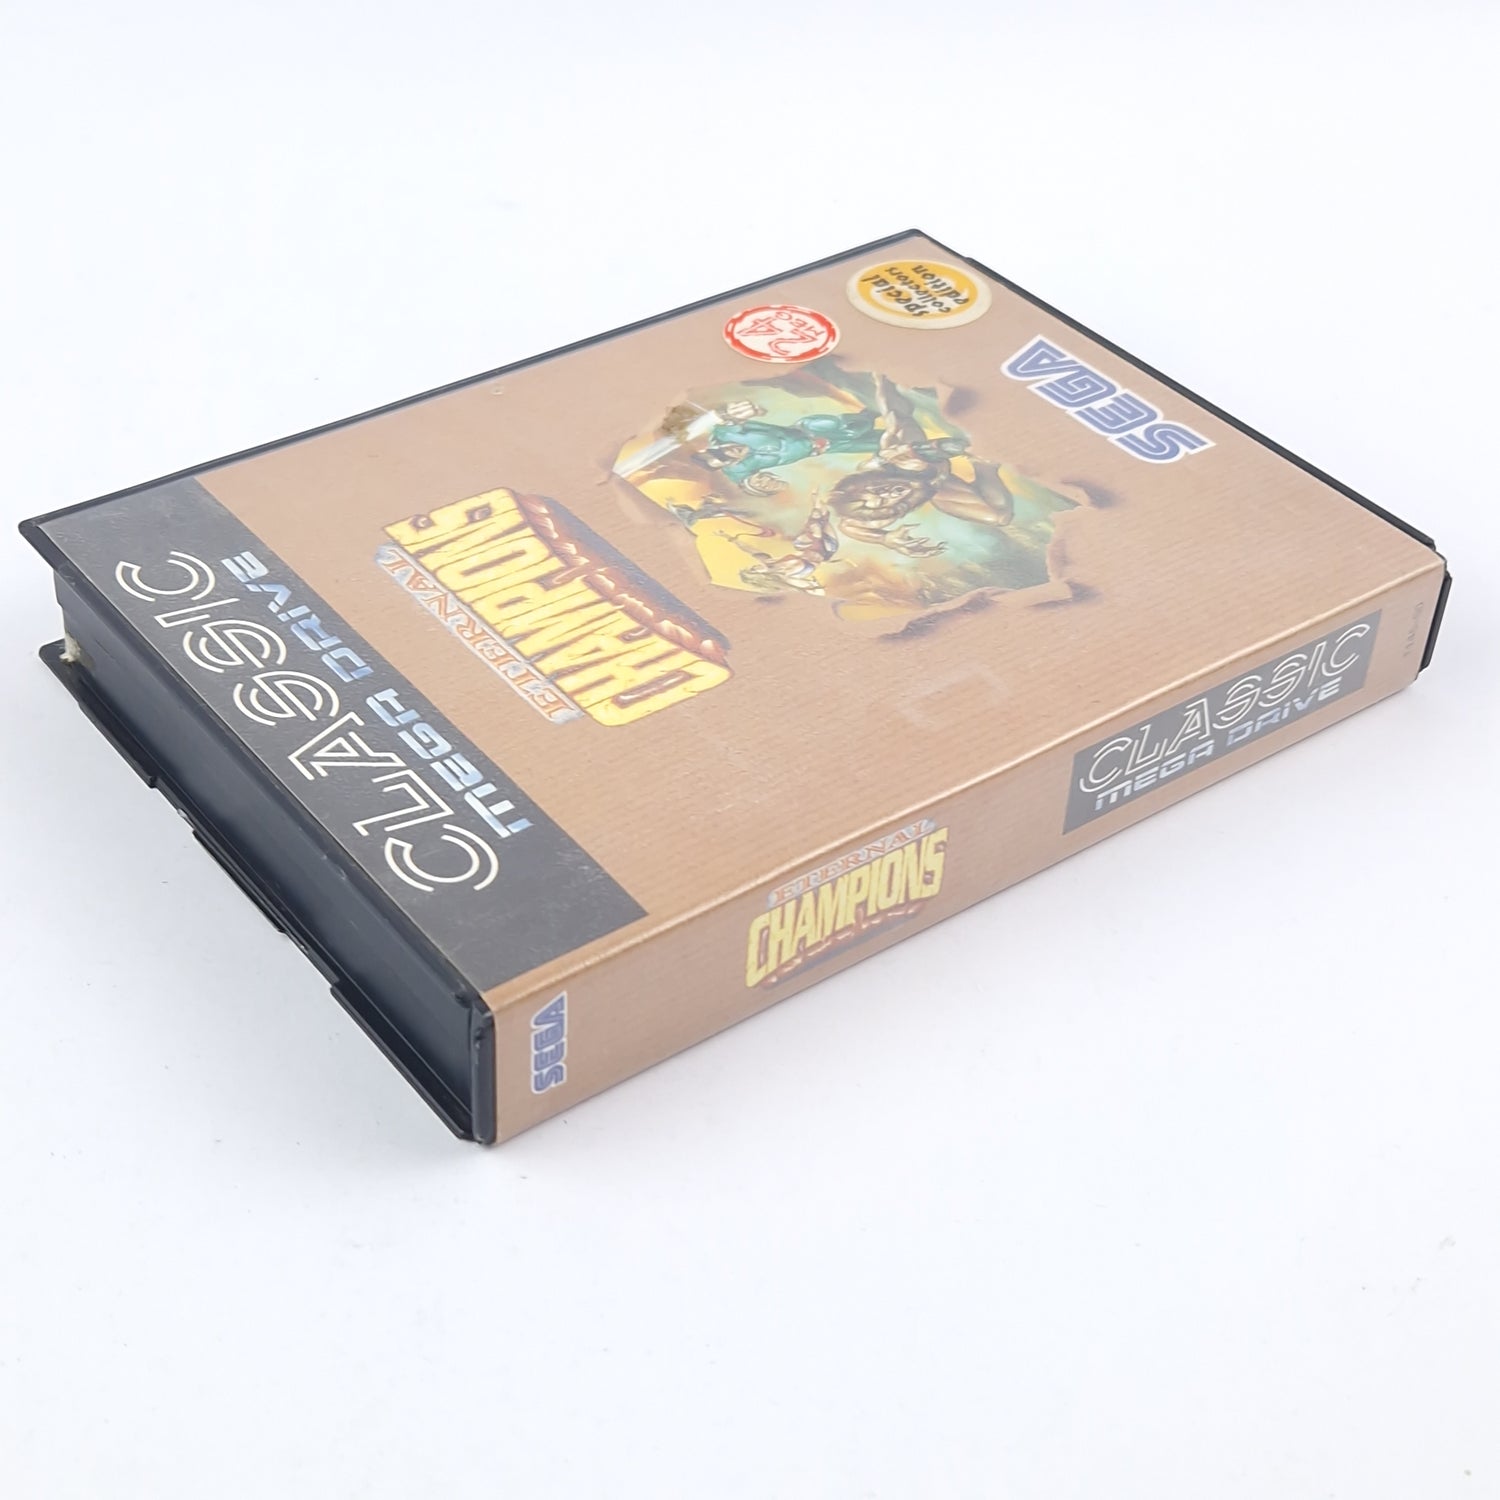 Sega Mega Drive Game: Eternal Champions - Module Instructions OVP cib / PAL Game